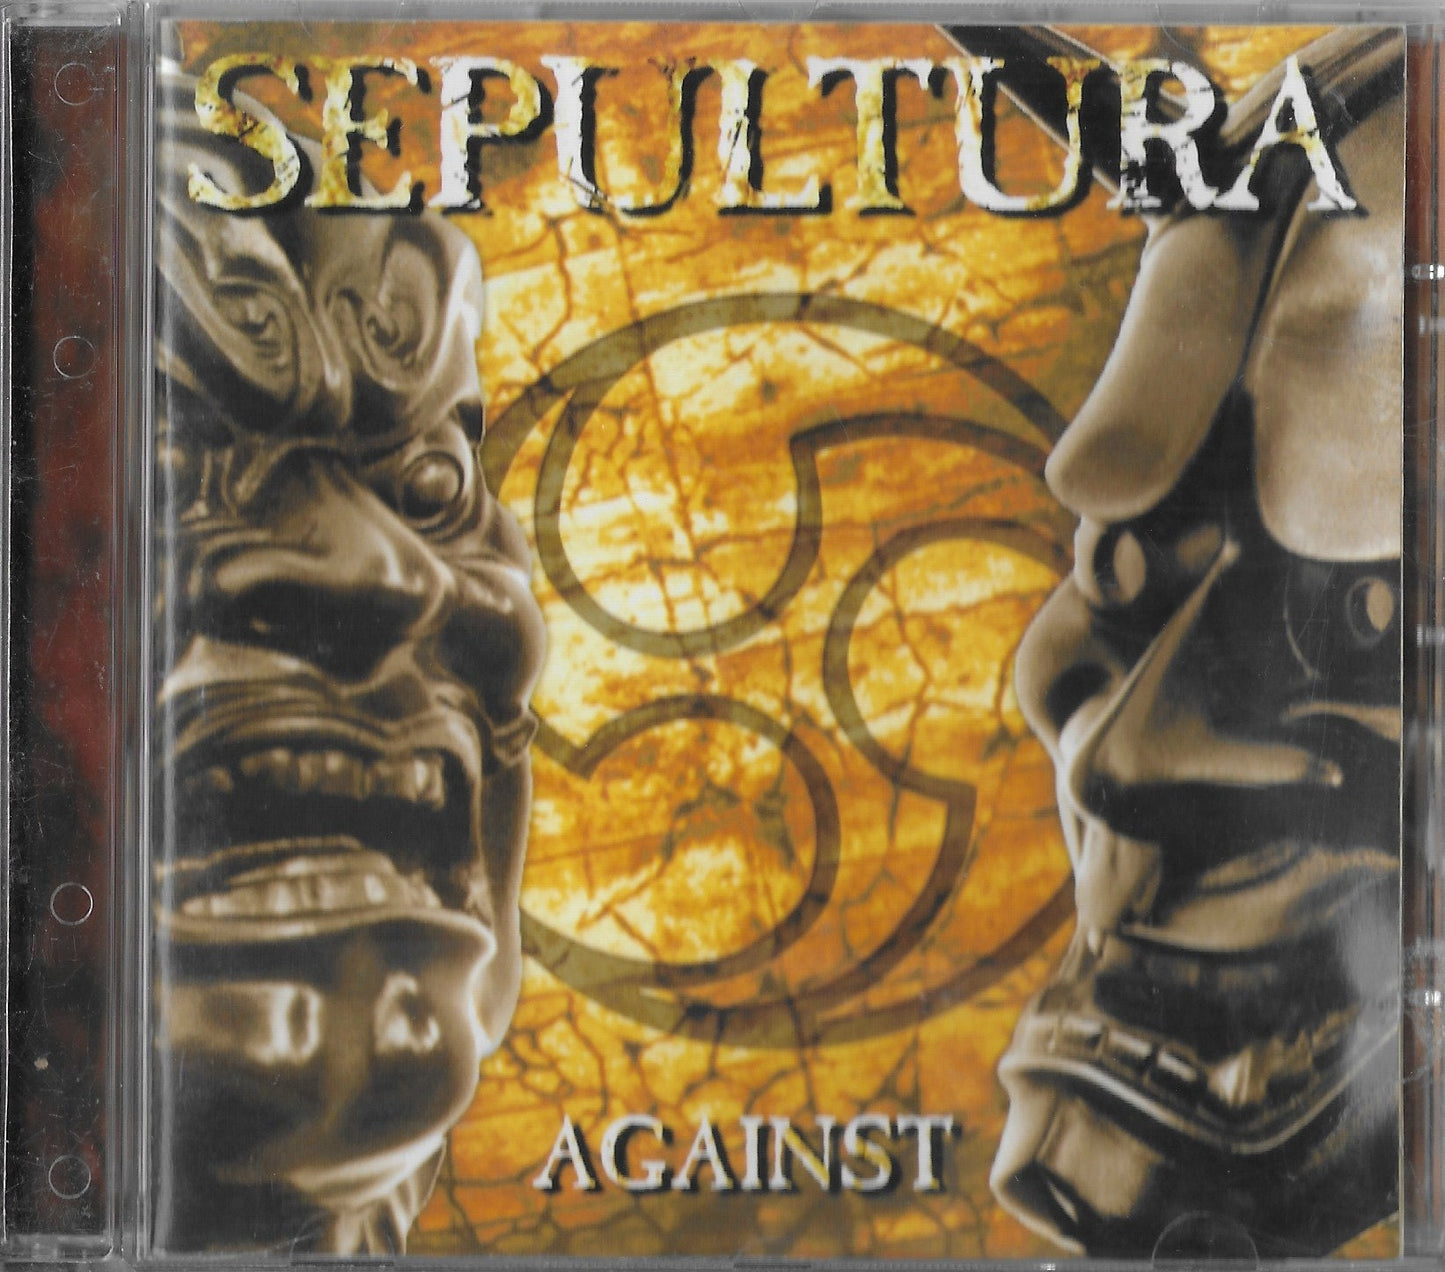 SEPULTURA - Against